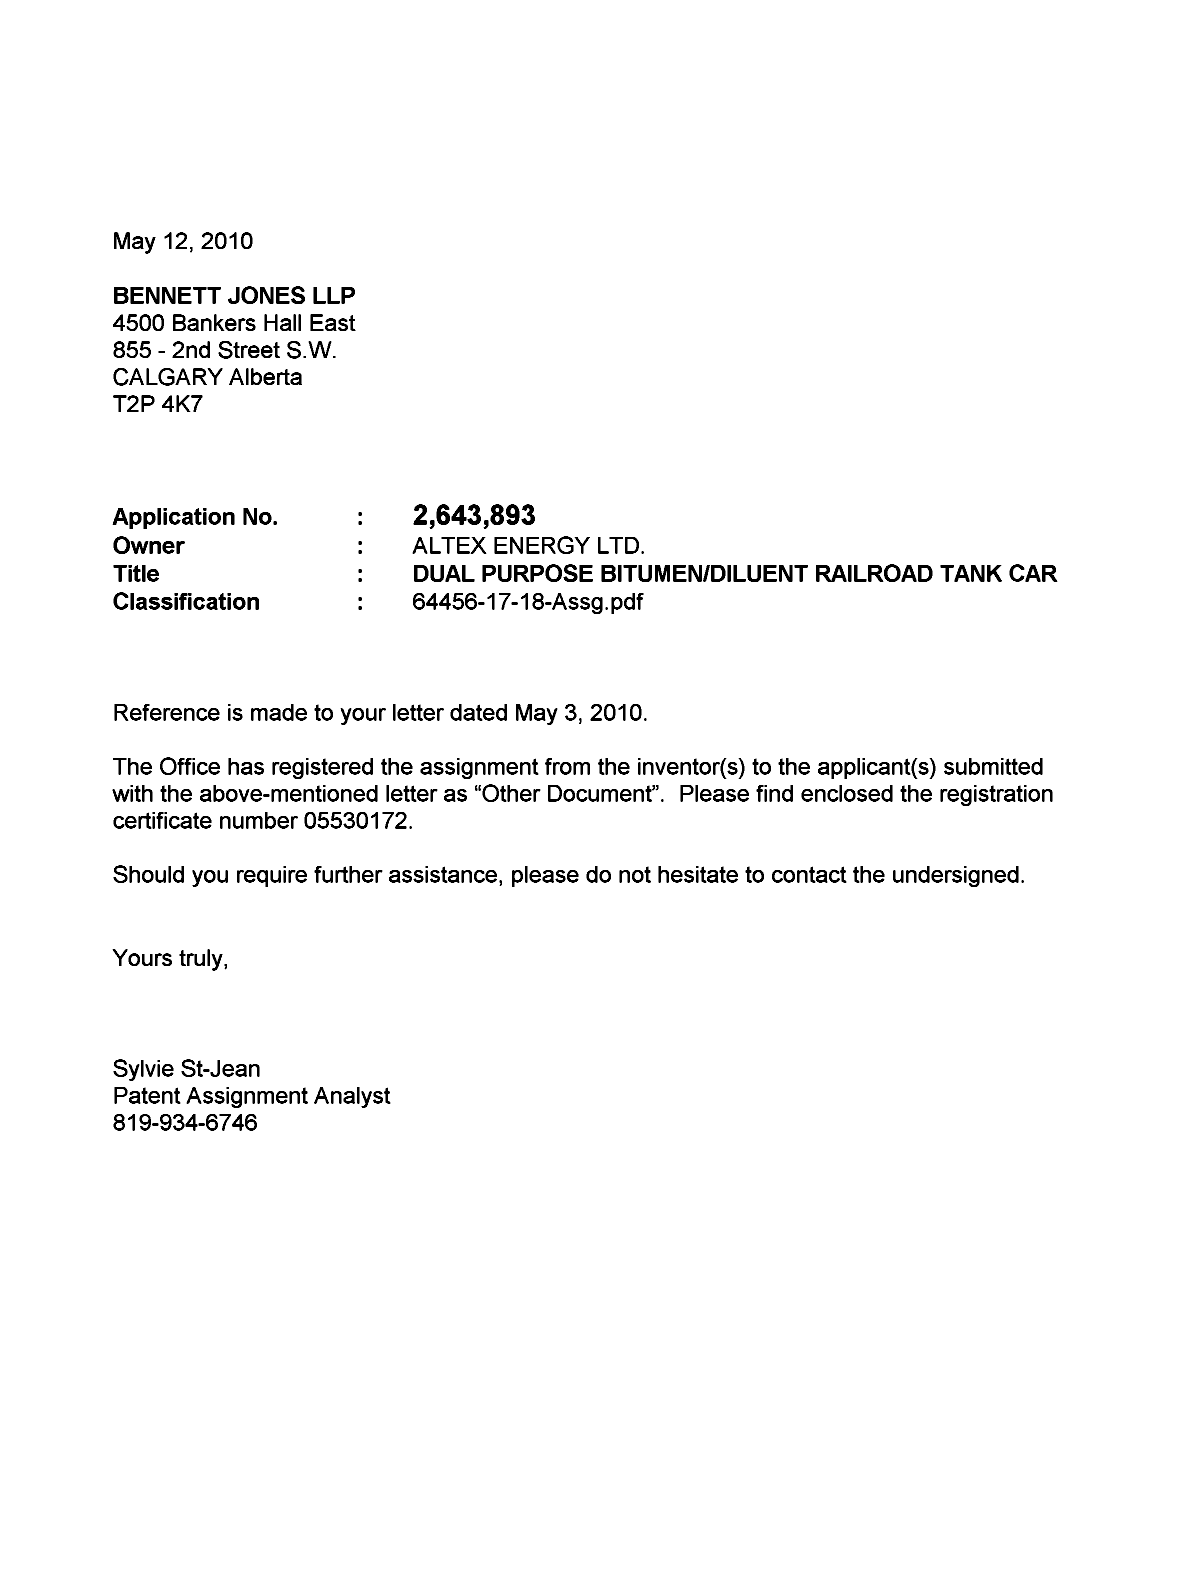 Canadian Patent Document 2643893. Correspondence 20091212. Image 1 of 1